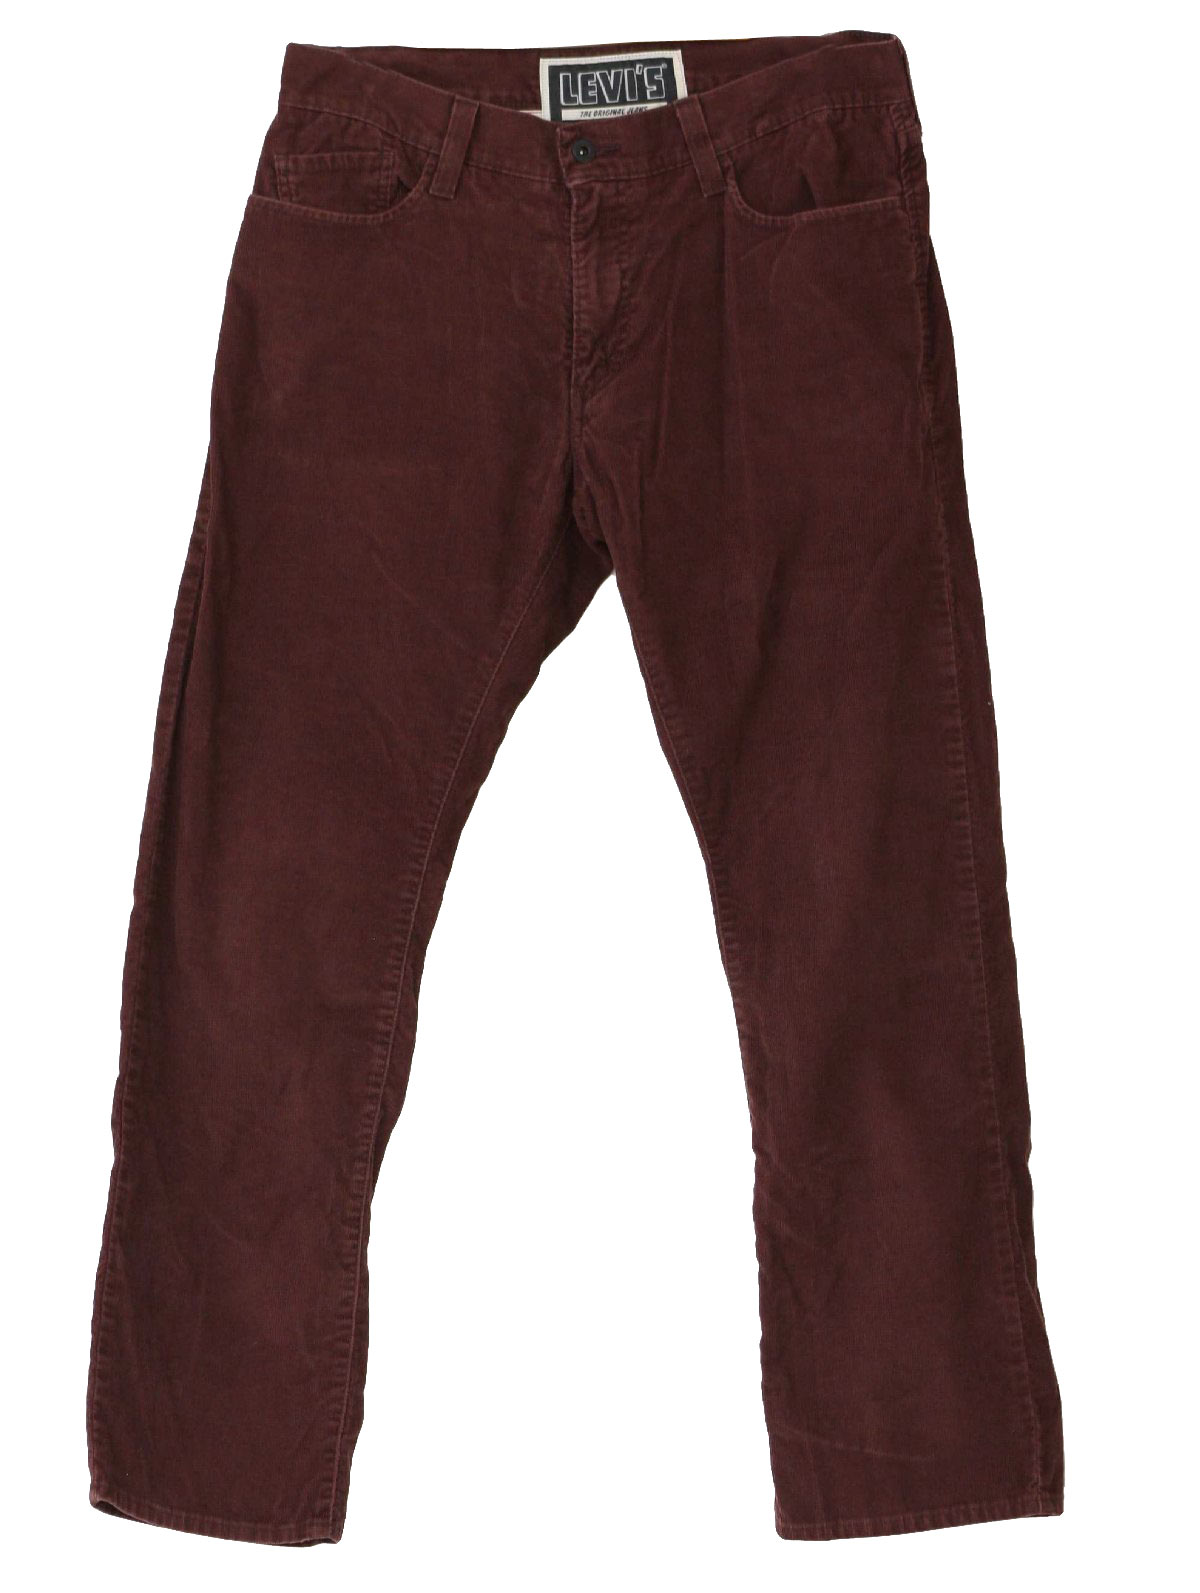 90's Vintage Pants: 90s -Levis- Mens chocolate brown cotton polyester ...